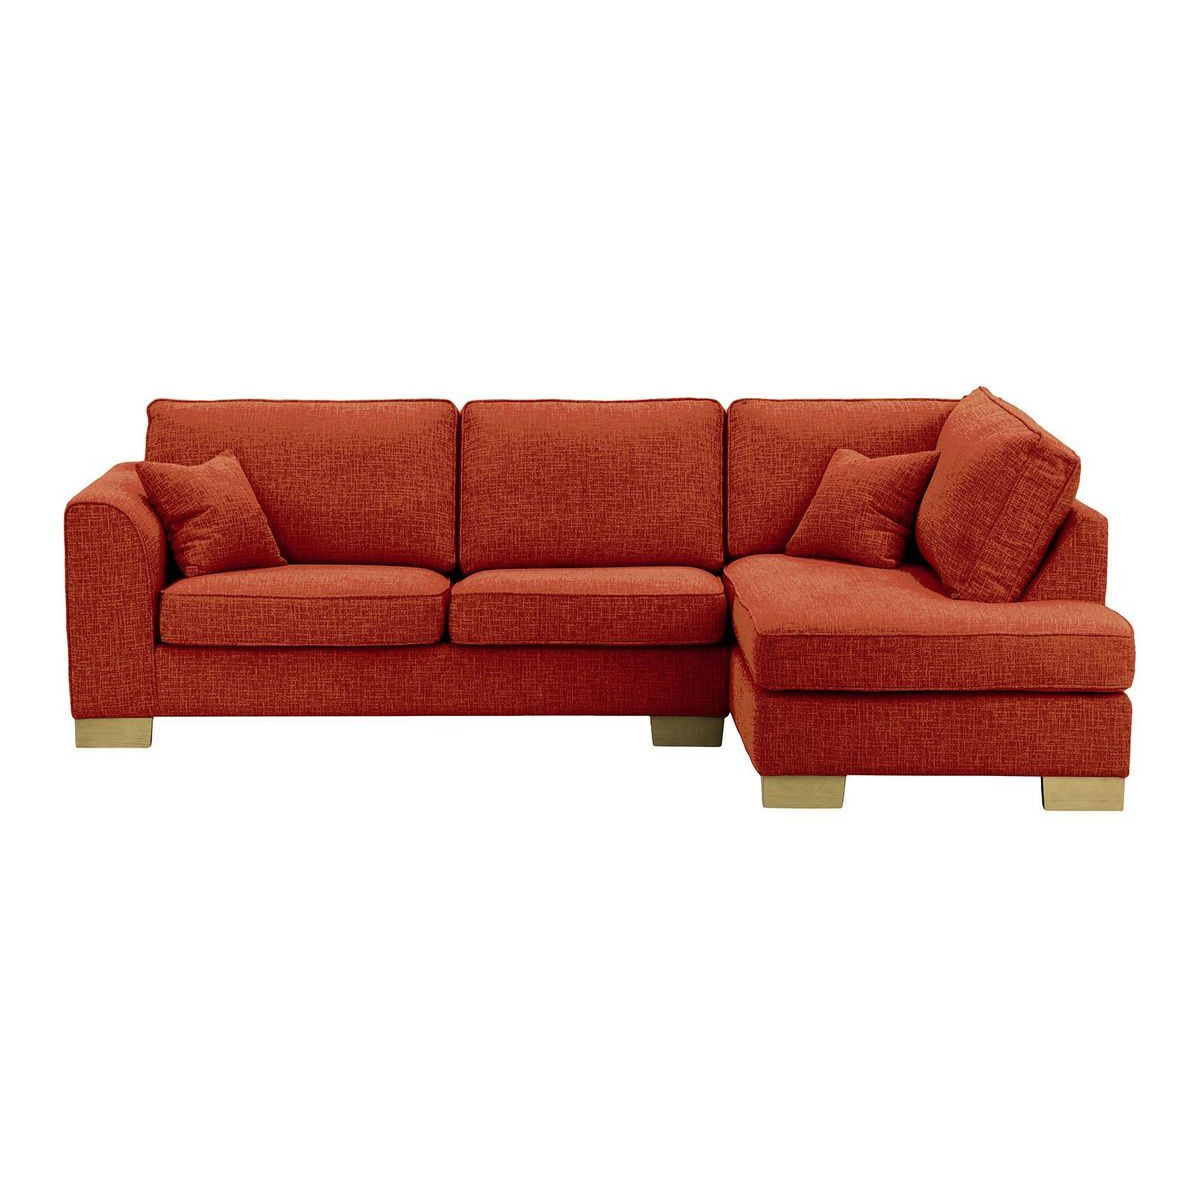 Avos Large Right Hand Corner Sofa, burnt orange, Leg colour: wax black - image 1